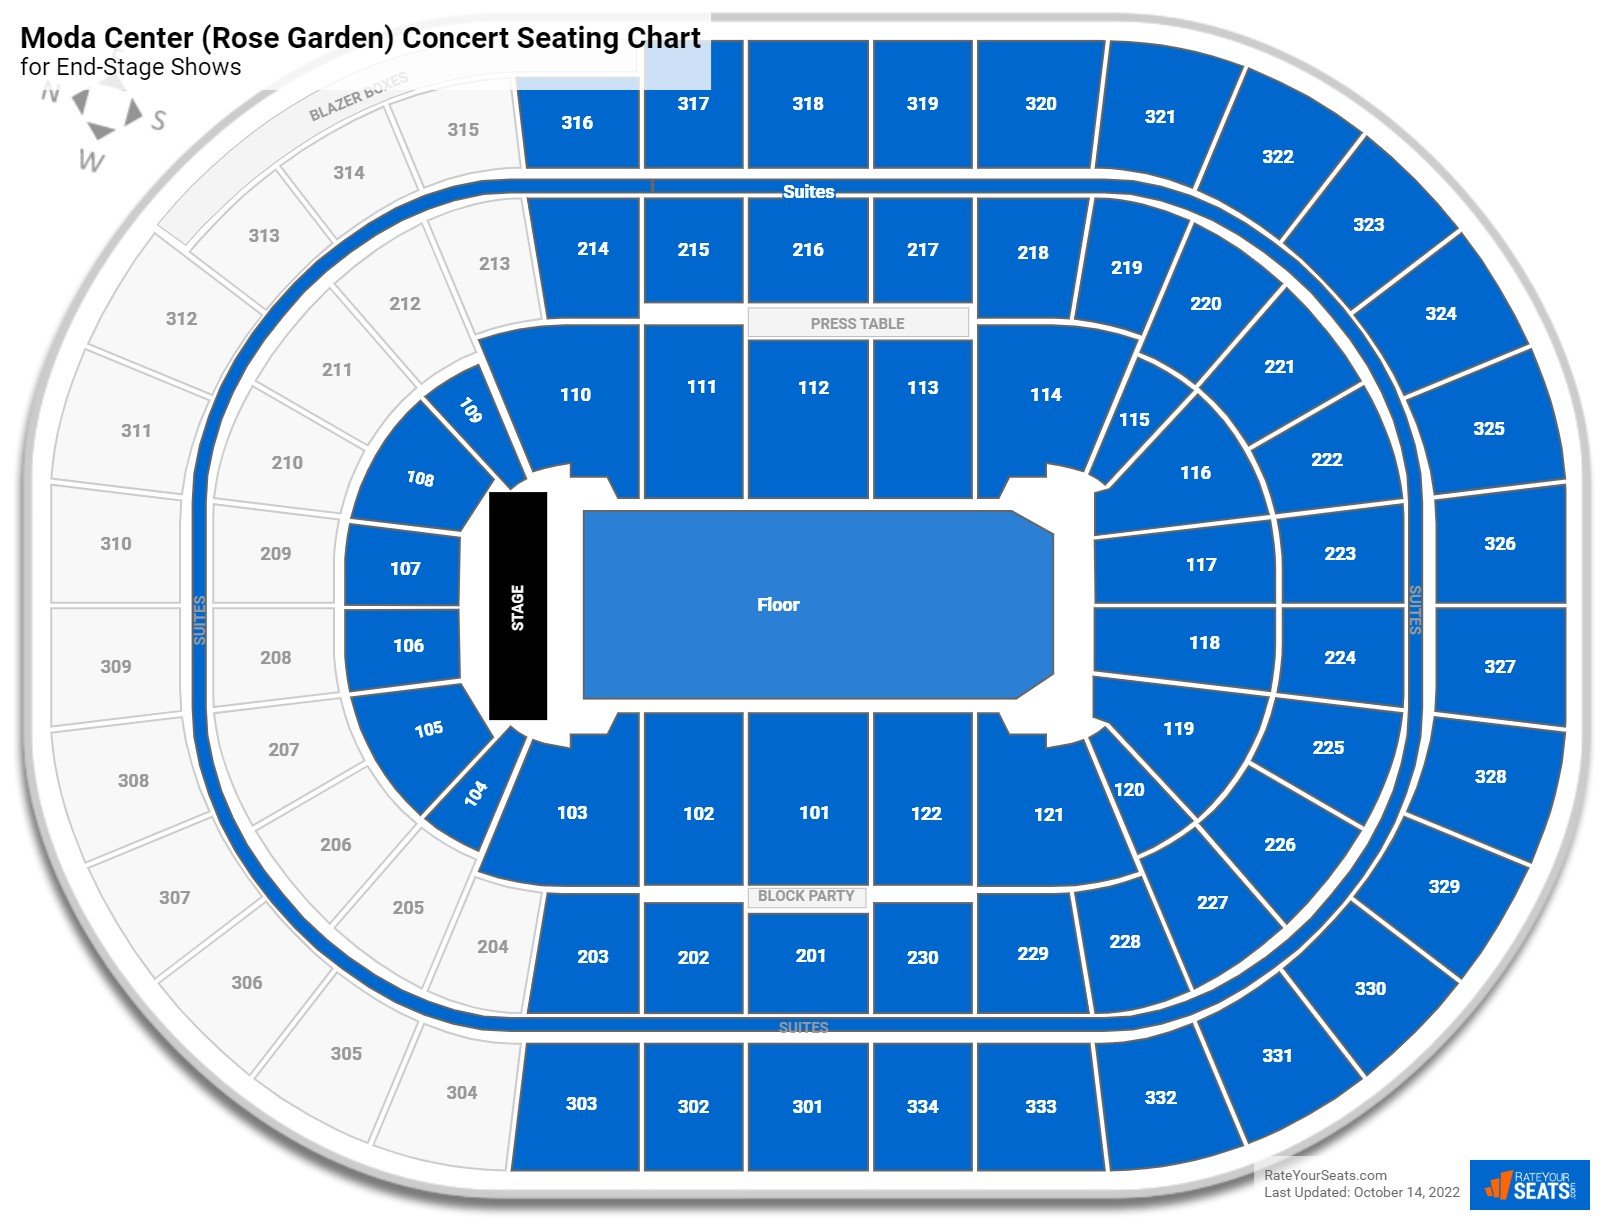 Moda Center (Rose Garden) Concert Seating Chart